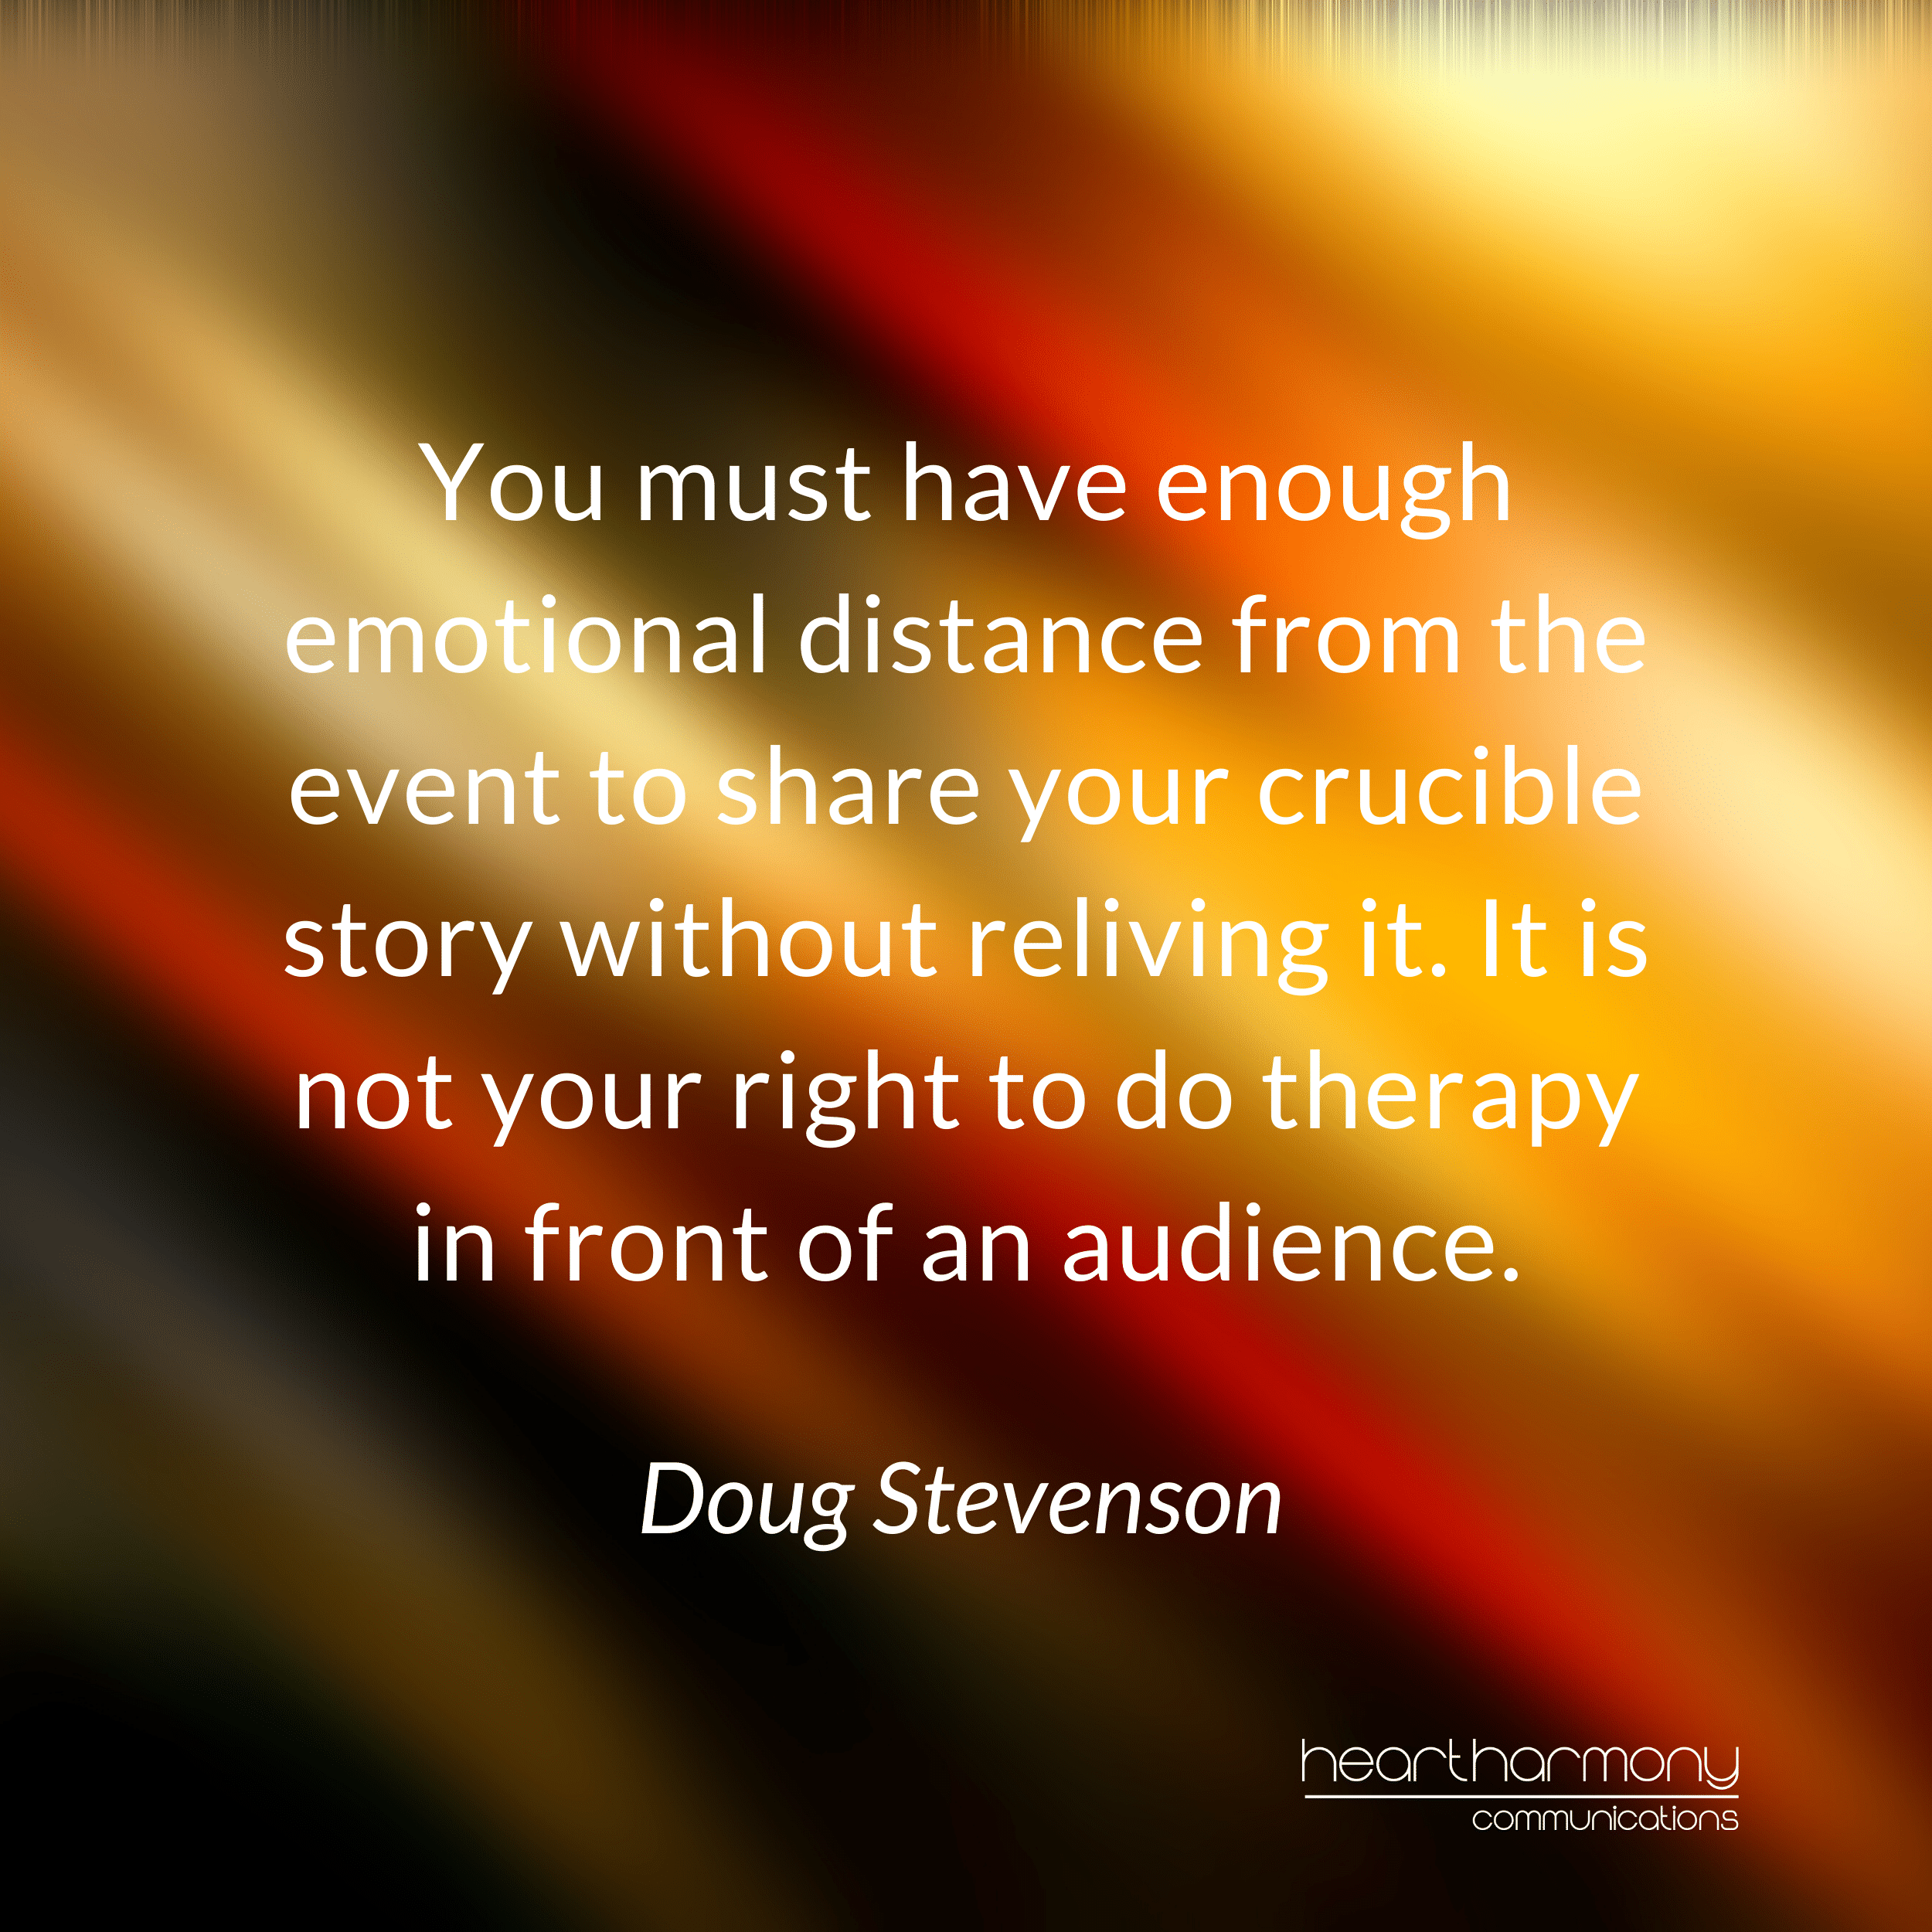 Doug Stevenson quote.